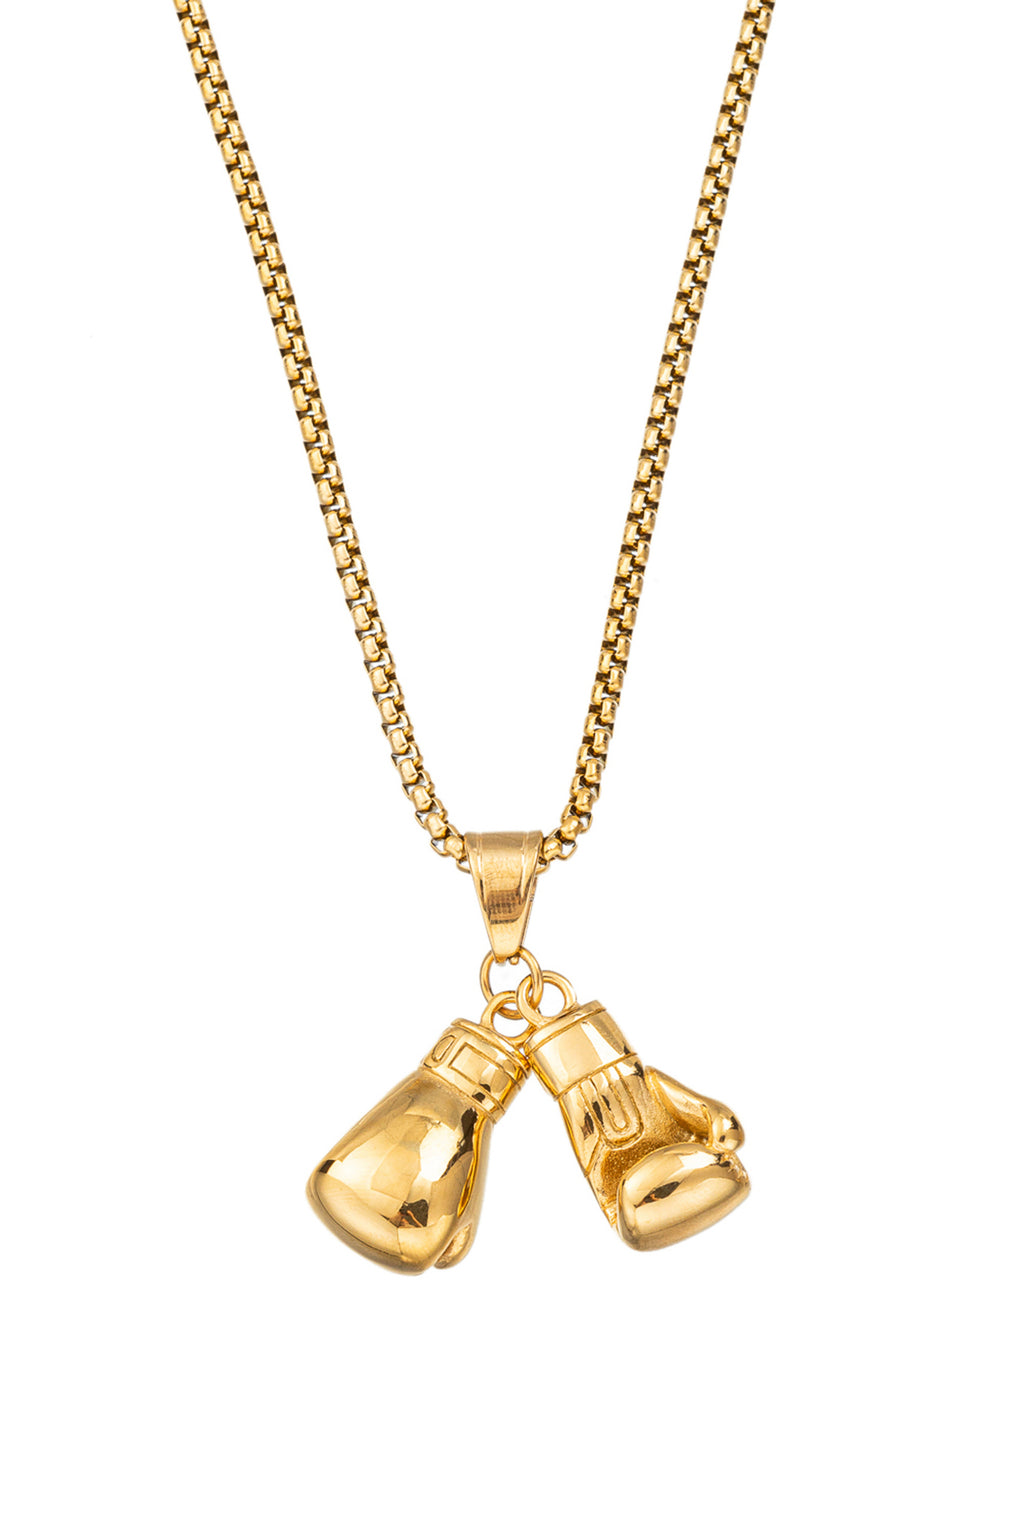 Gold tone titanium boxing gloves pendant necklace.